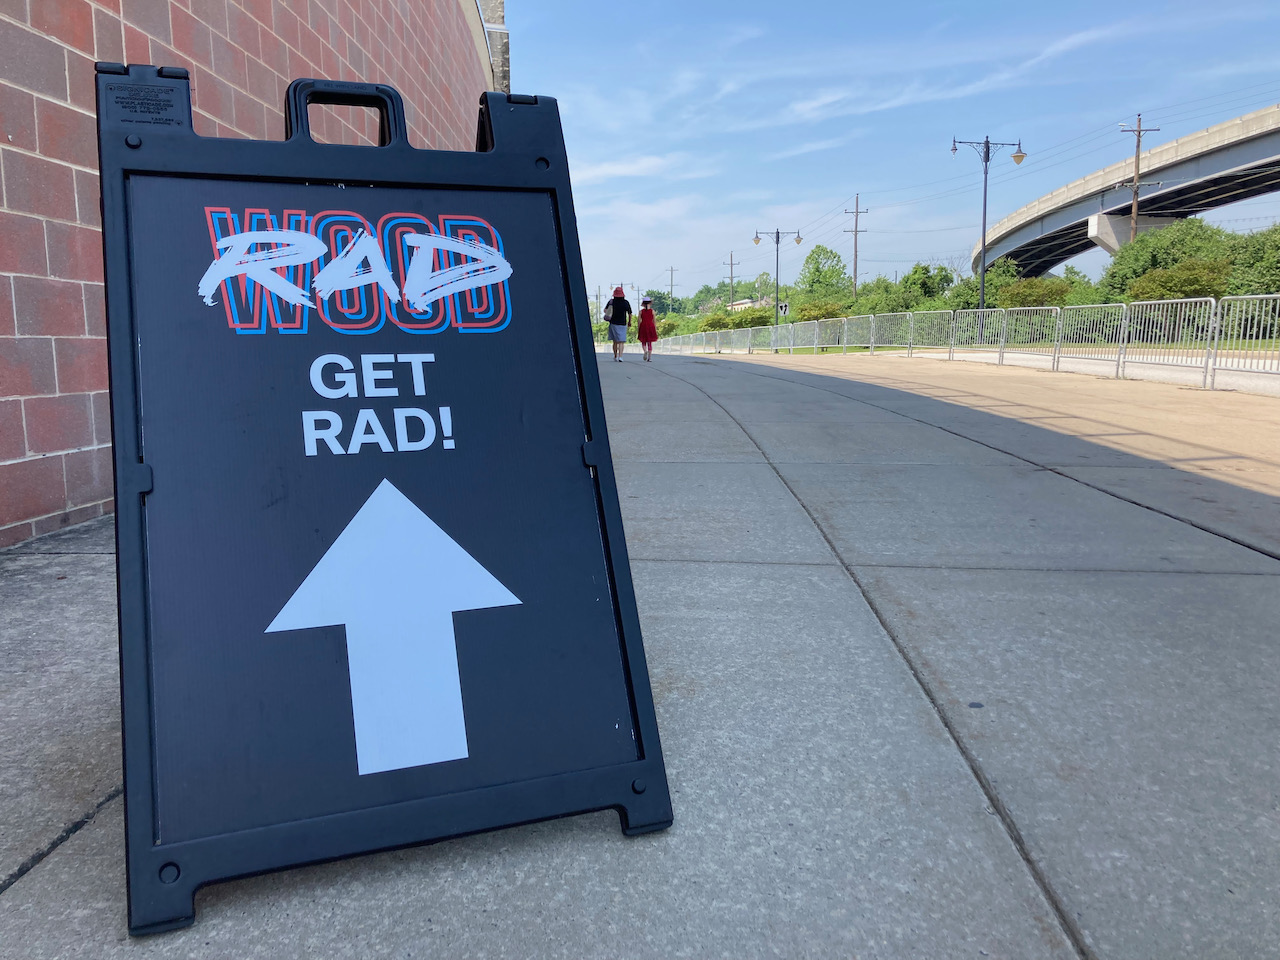 Entrance sign that says RADWOOD GET RAD!